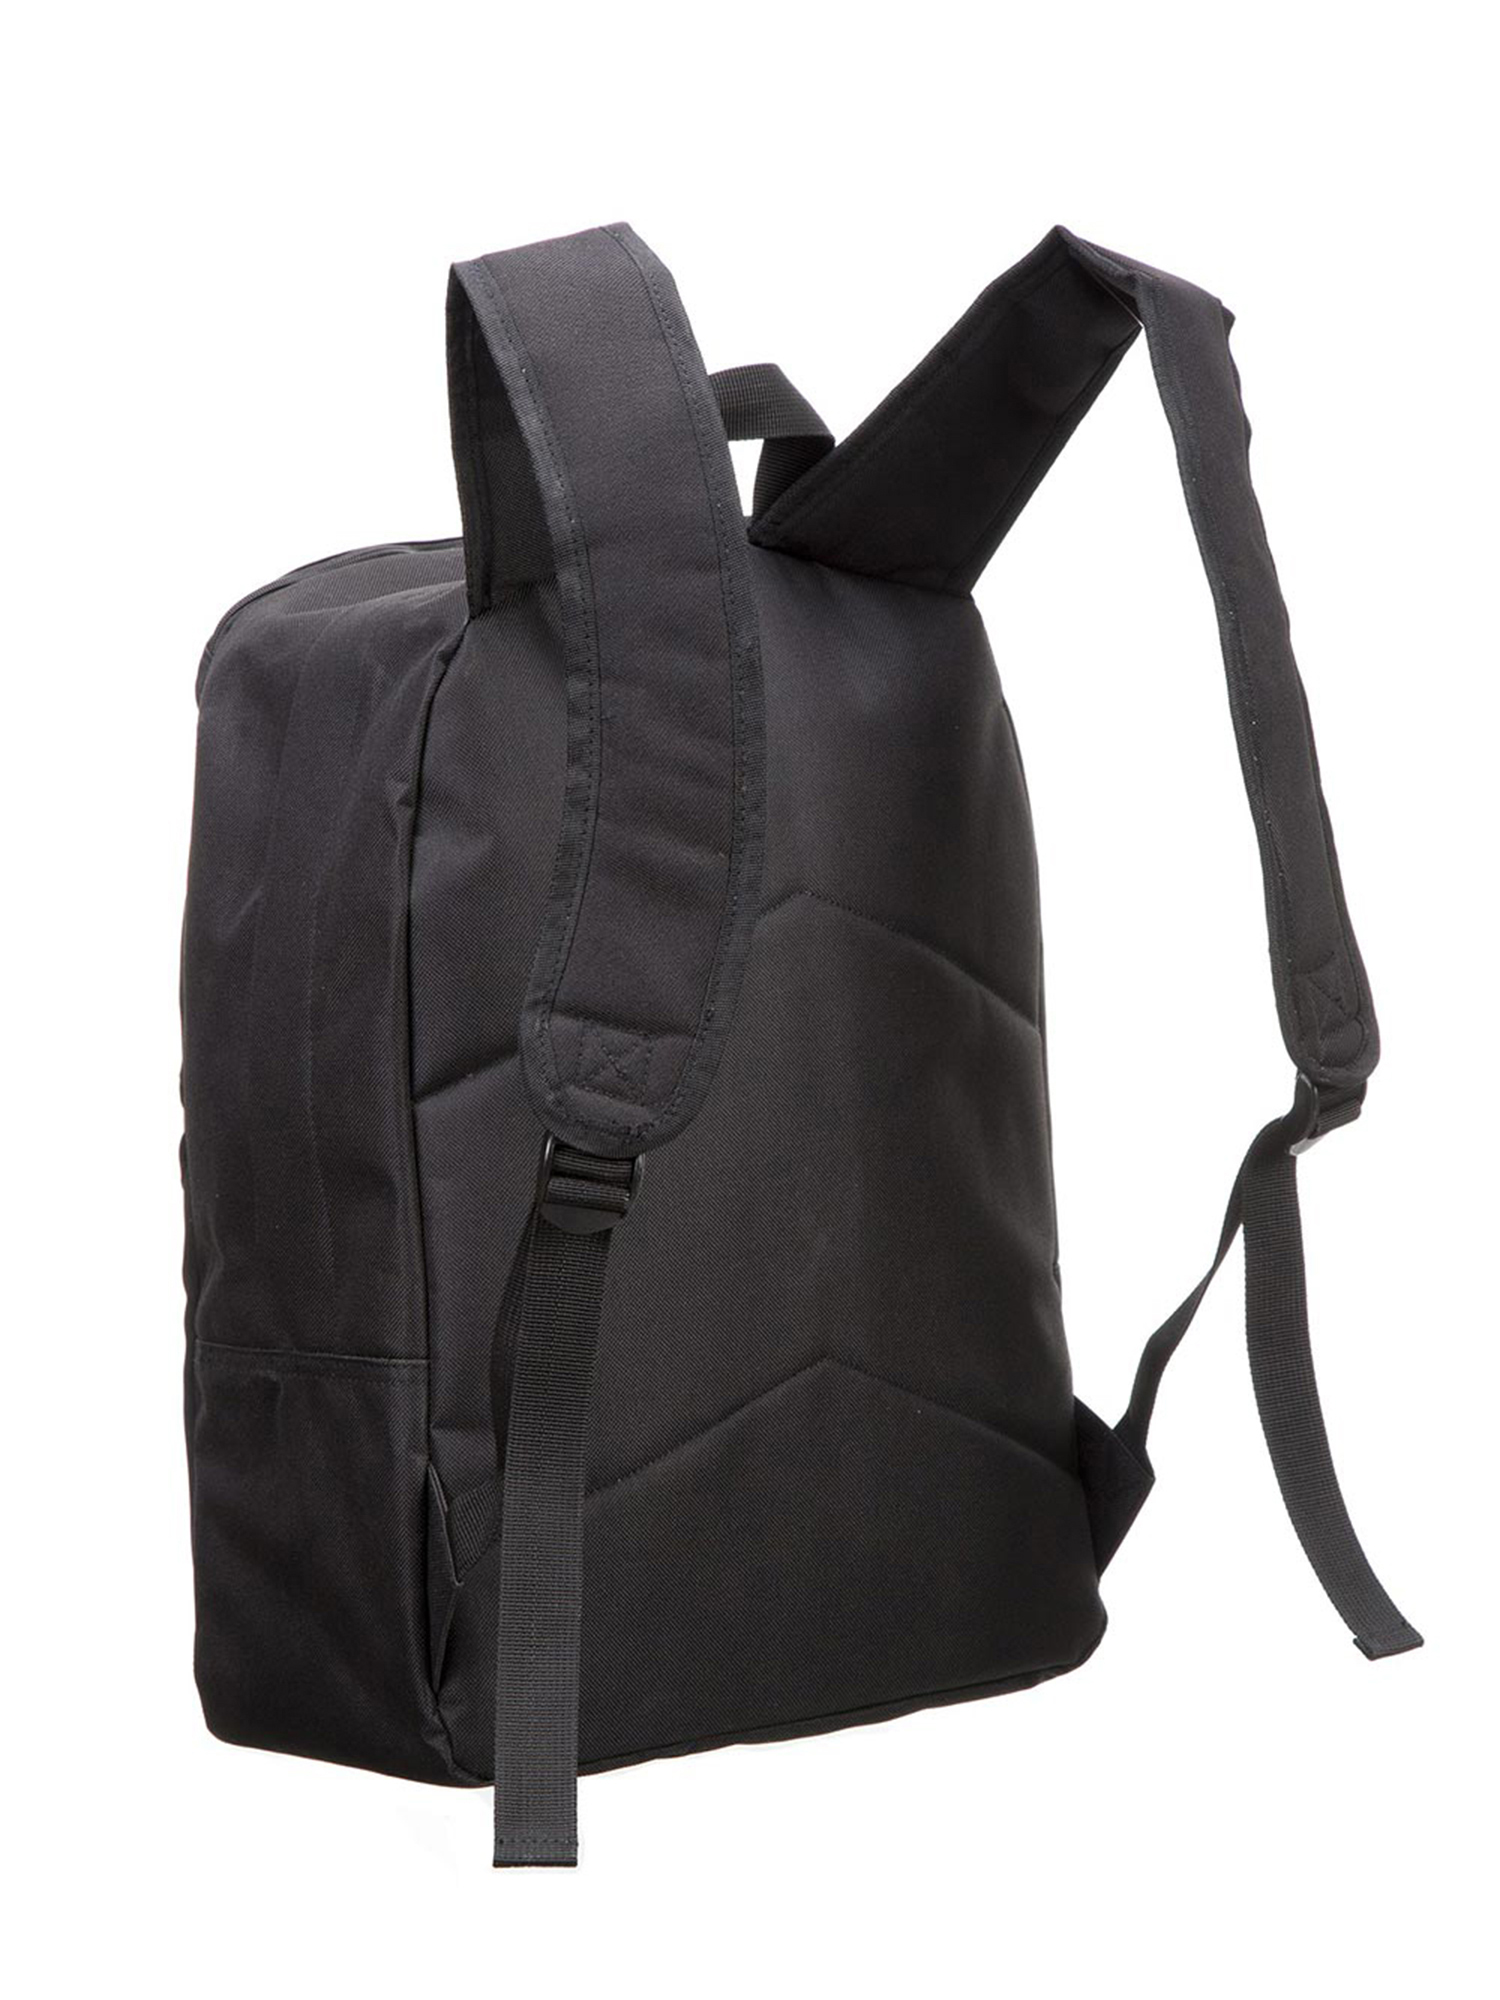 ZIPIT Ninja Backpack for Boys Elementary School & Preschool, Cute Book Bag for Kids (Black) - image 3 of 10